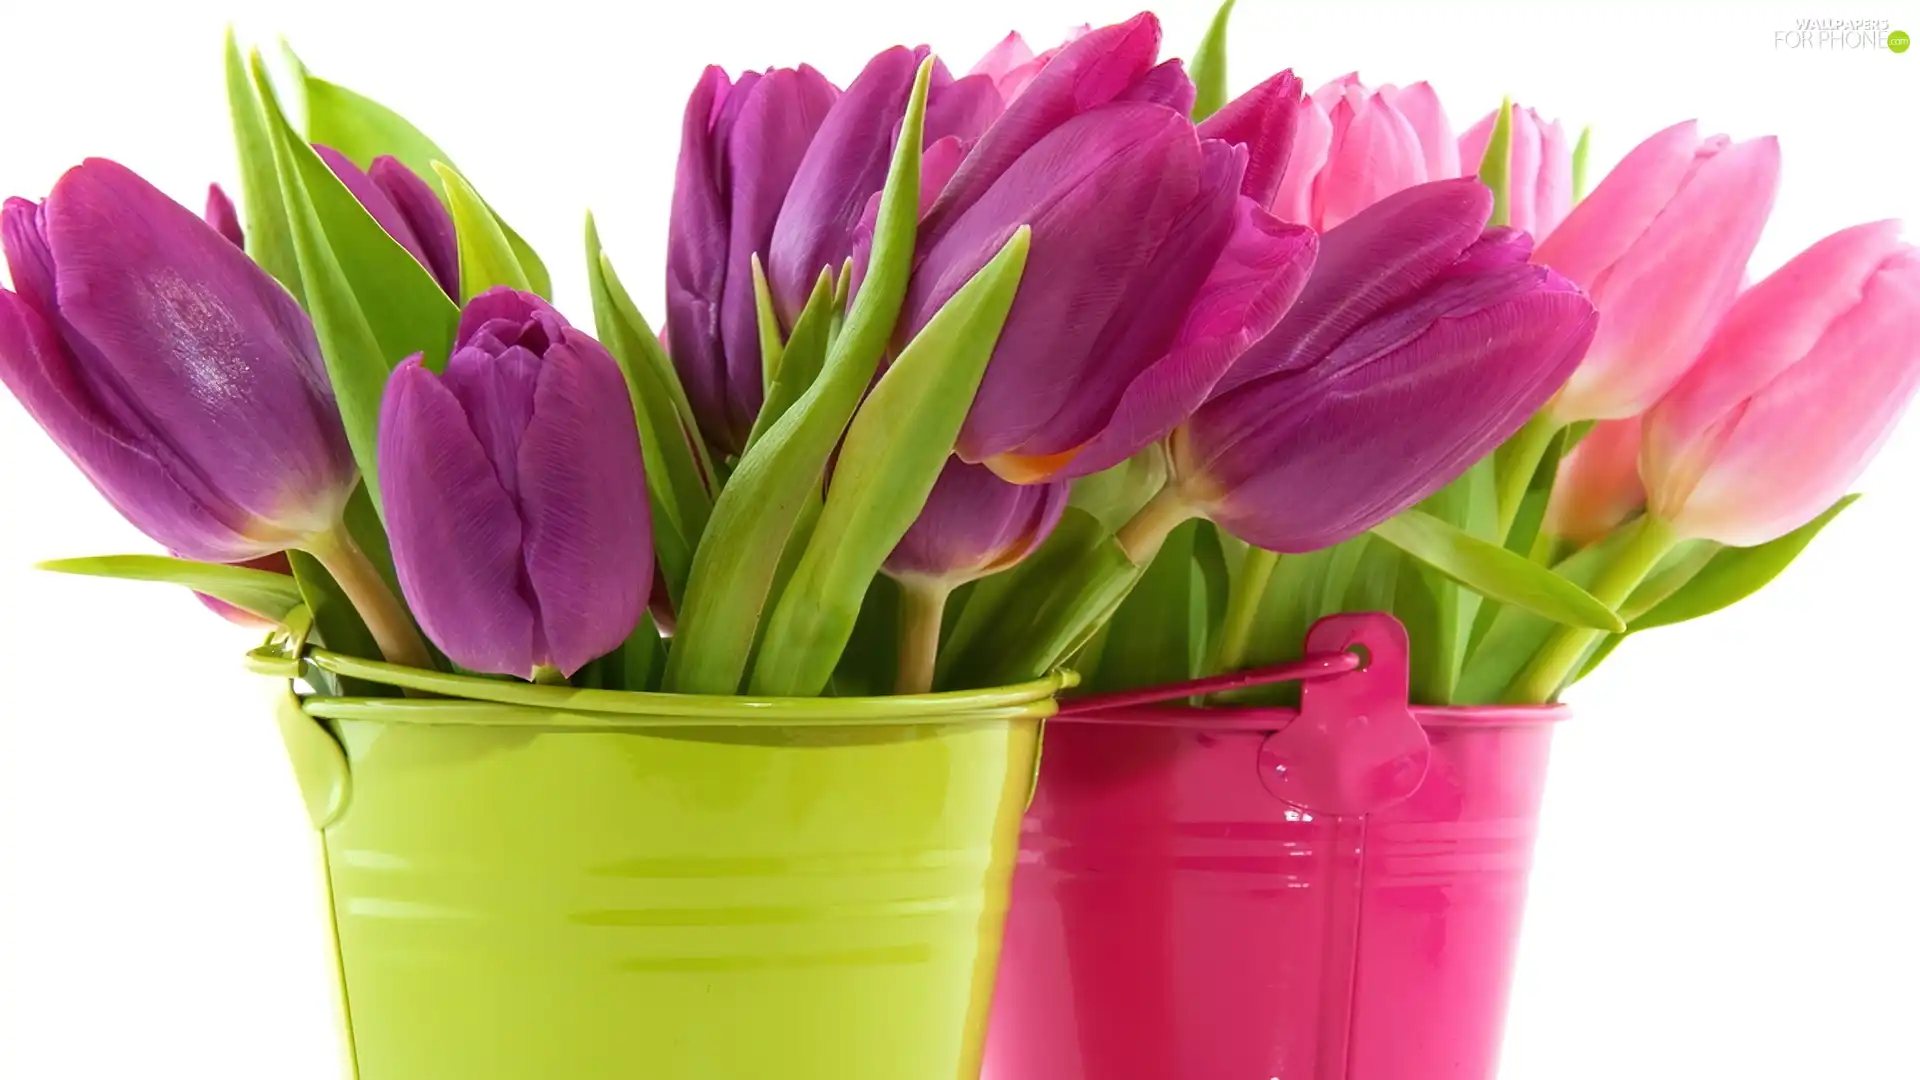 Bouquets, color, Buckets, tulips